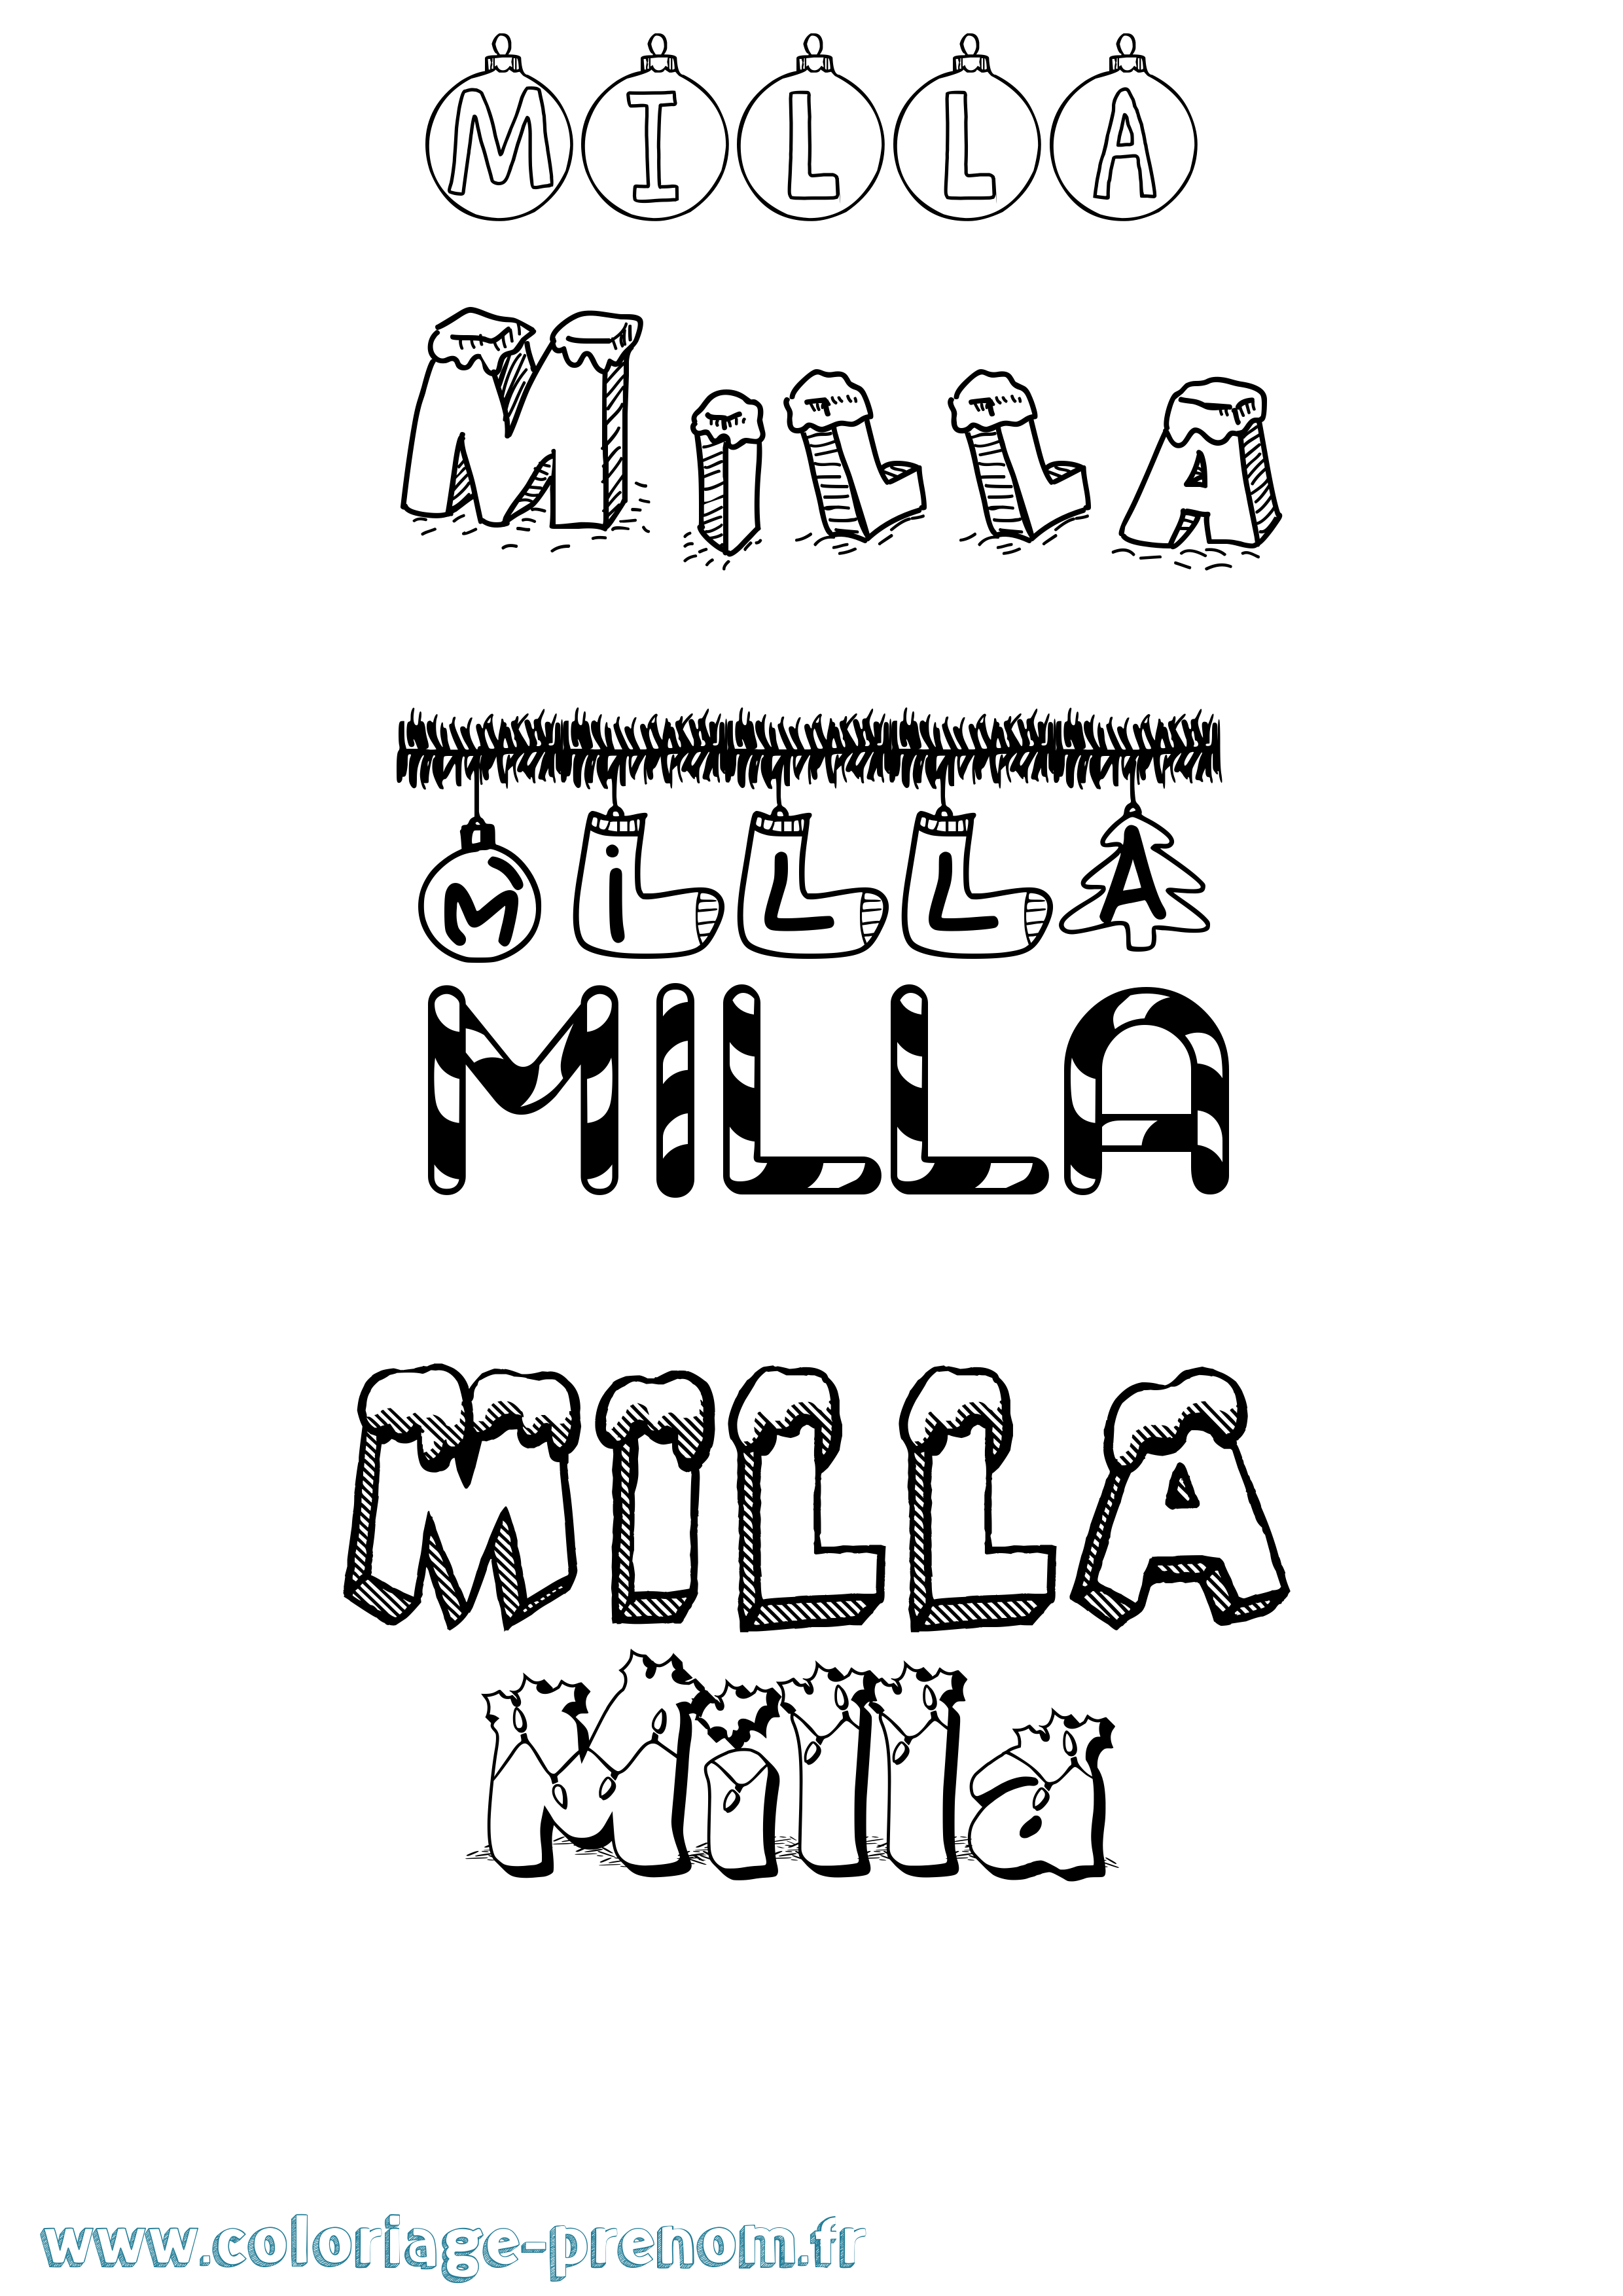 Coloriage prénom Milla